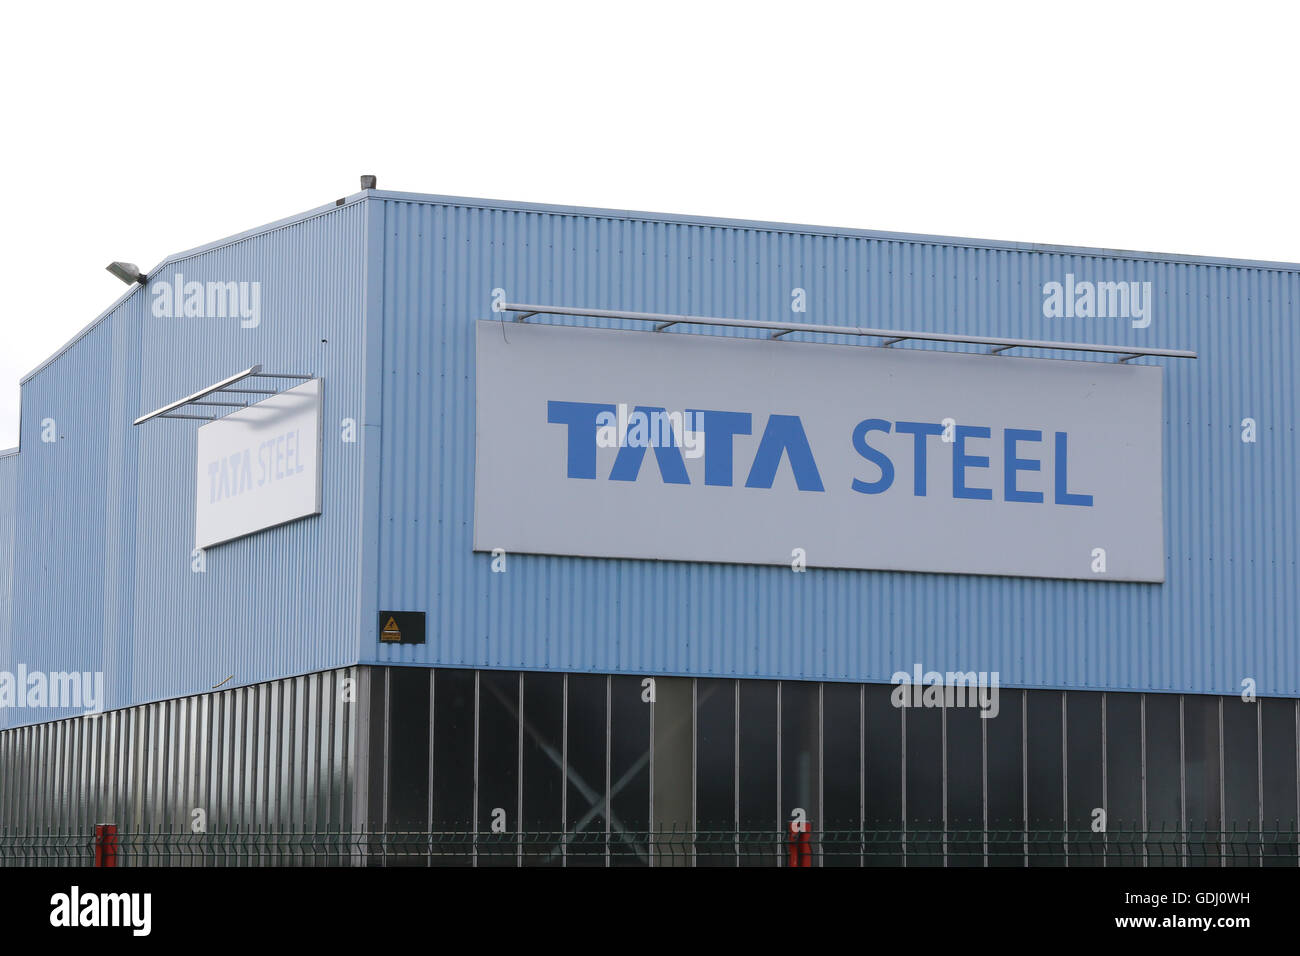 Tata Steel works sign logo Stock Photo - Alamy